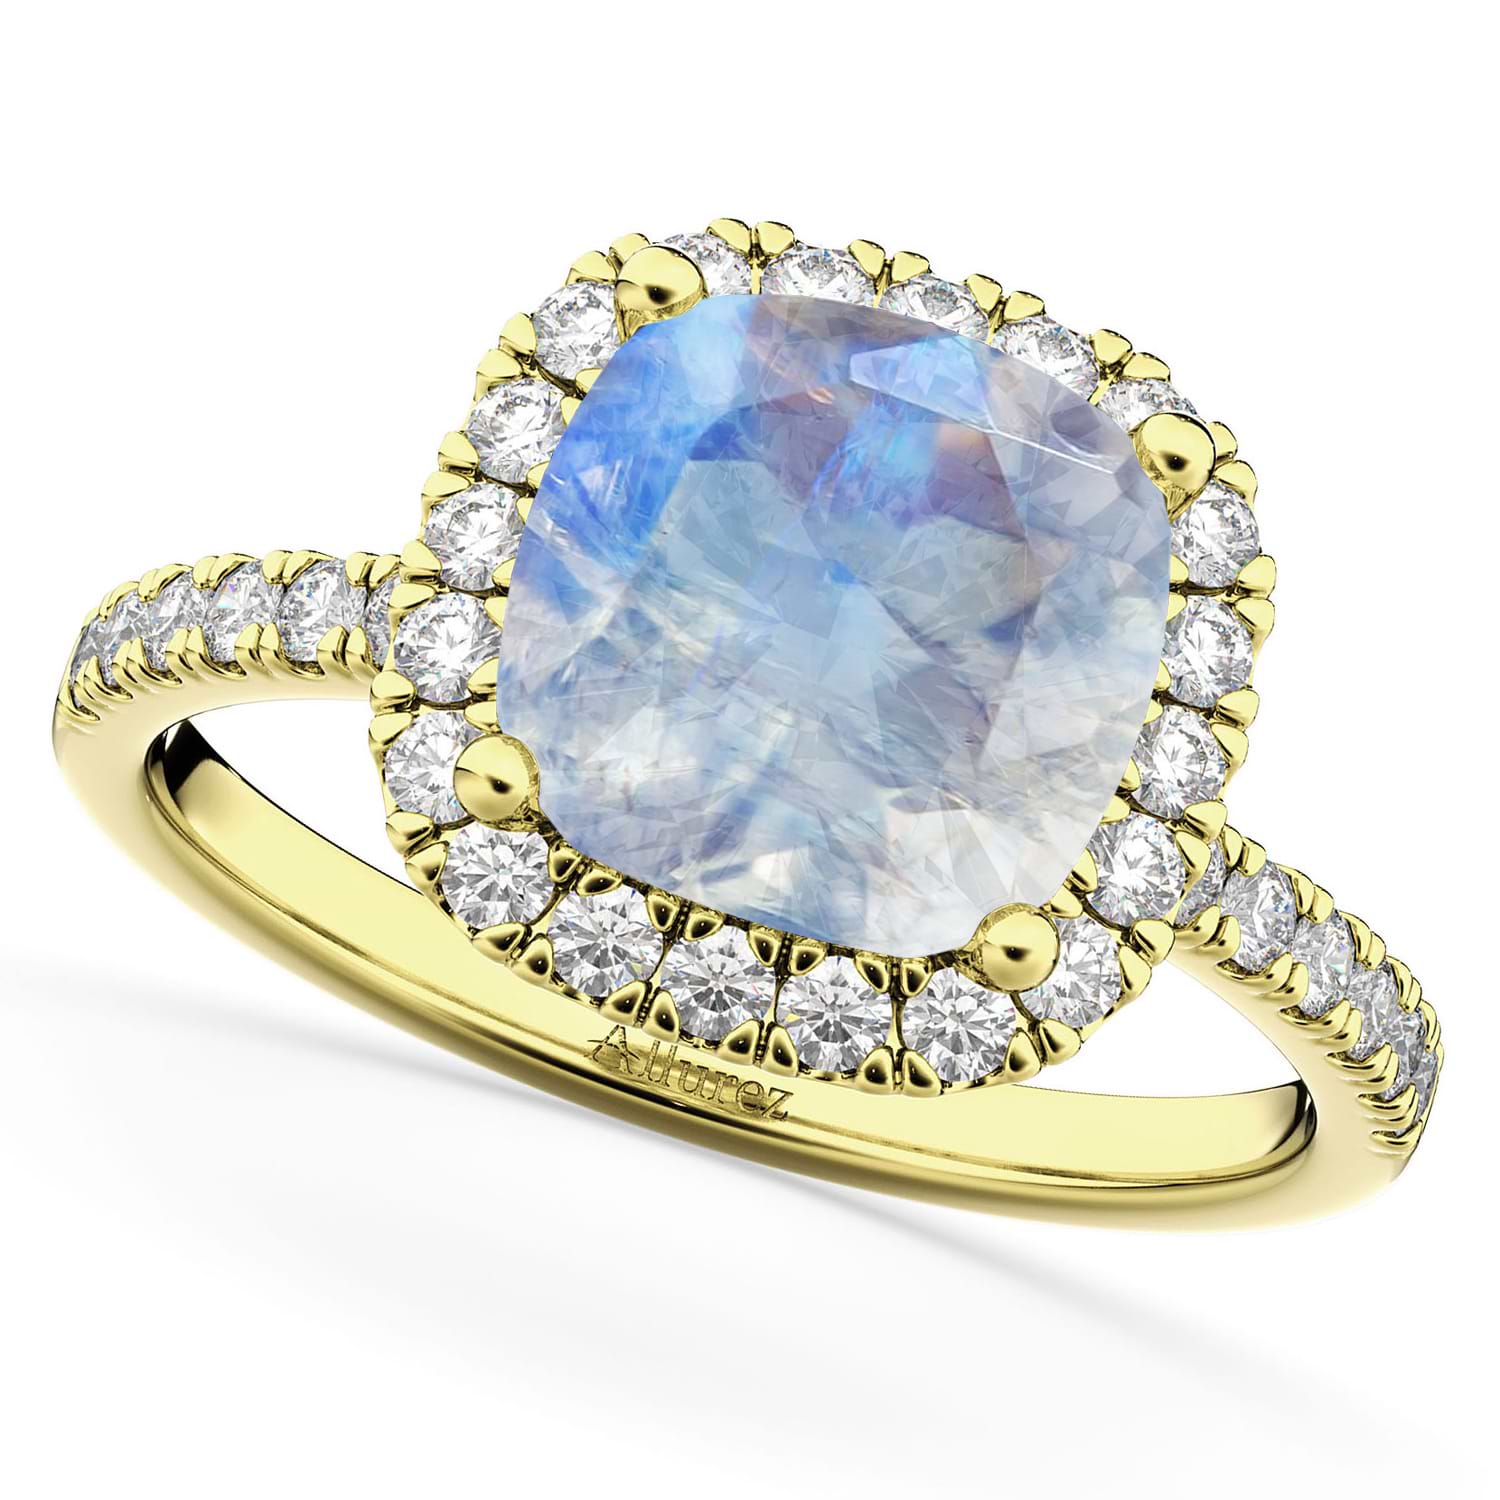 Cushion Cut Halo Moonstone & Diamond Engagement Ring 14k Yellow Gold (3.11ct)